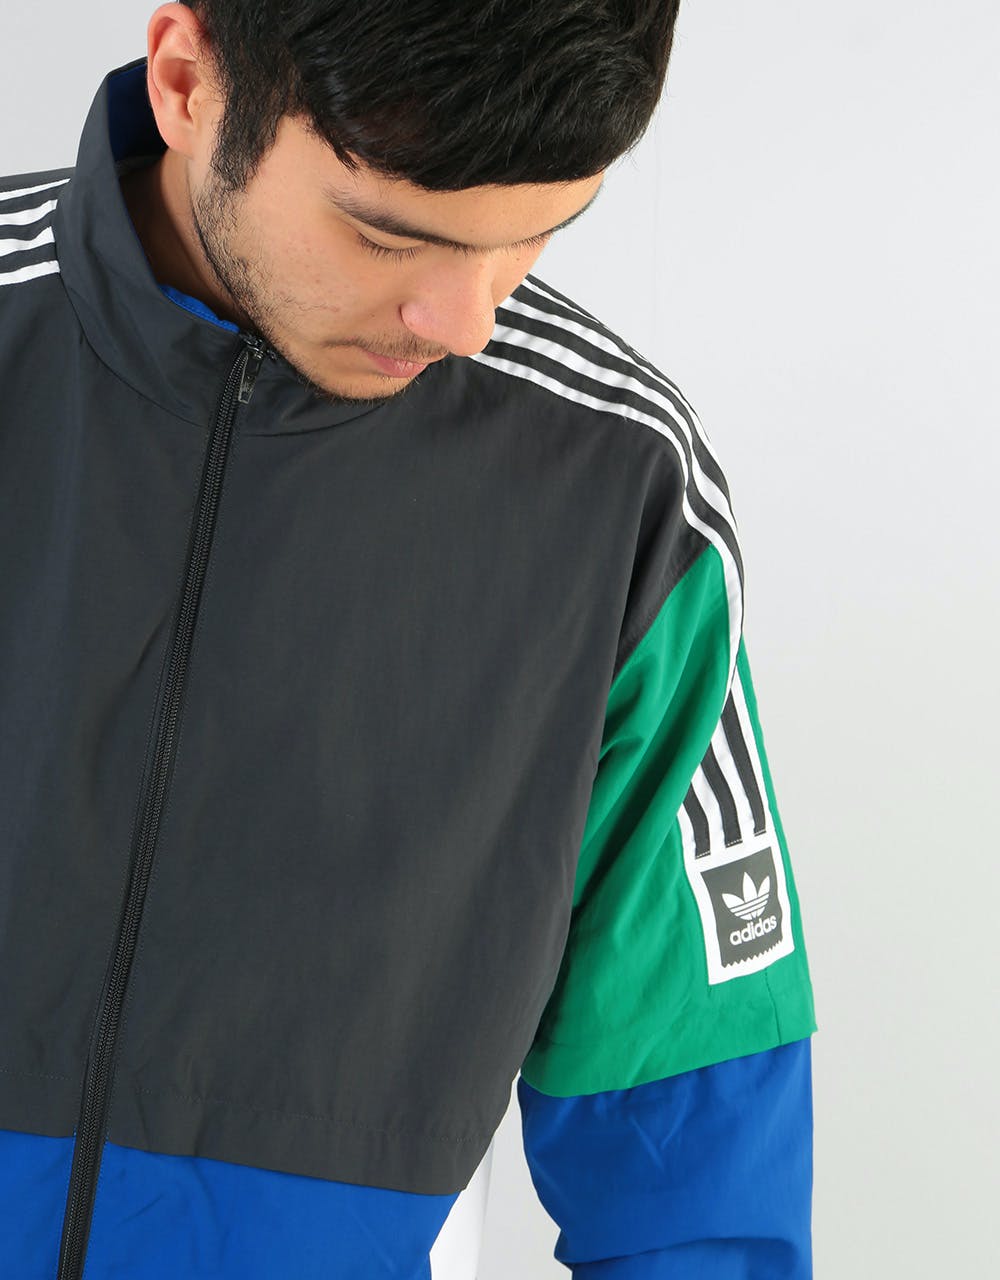 Adidas Standard 20 Jacket - Carbon/Collegiate Royal/Bold Green/White